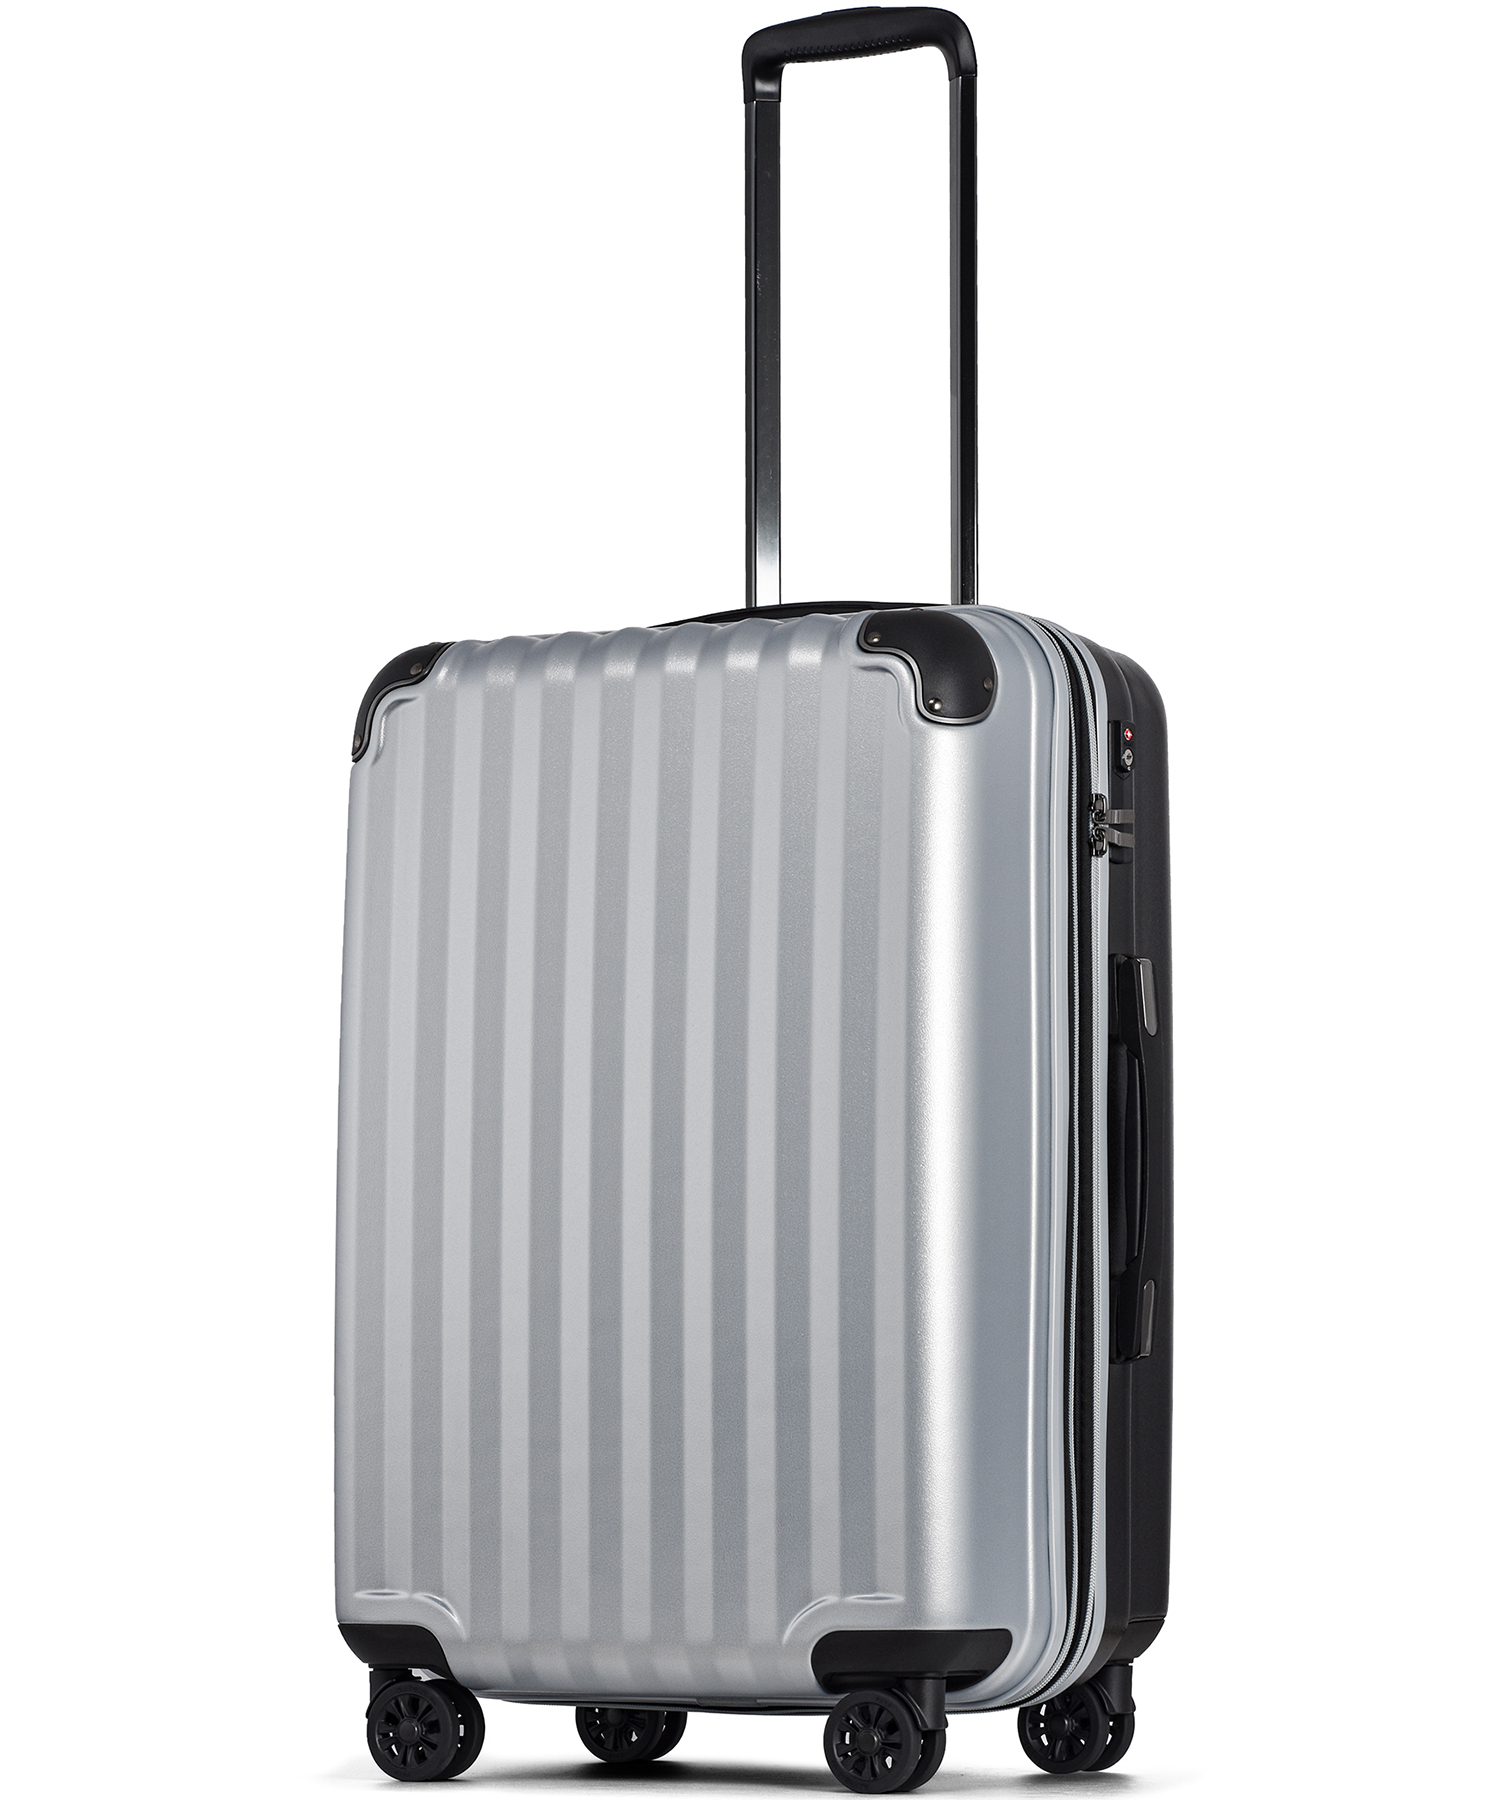 JP－Design】スーツケース LMサイズ 静音8輪キャスター 軽量 大容量 